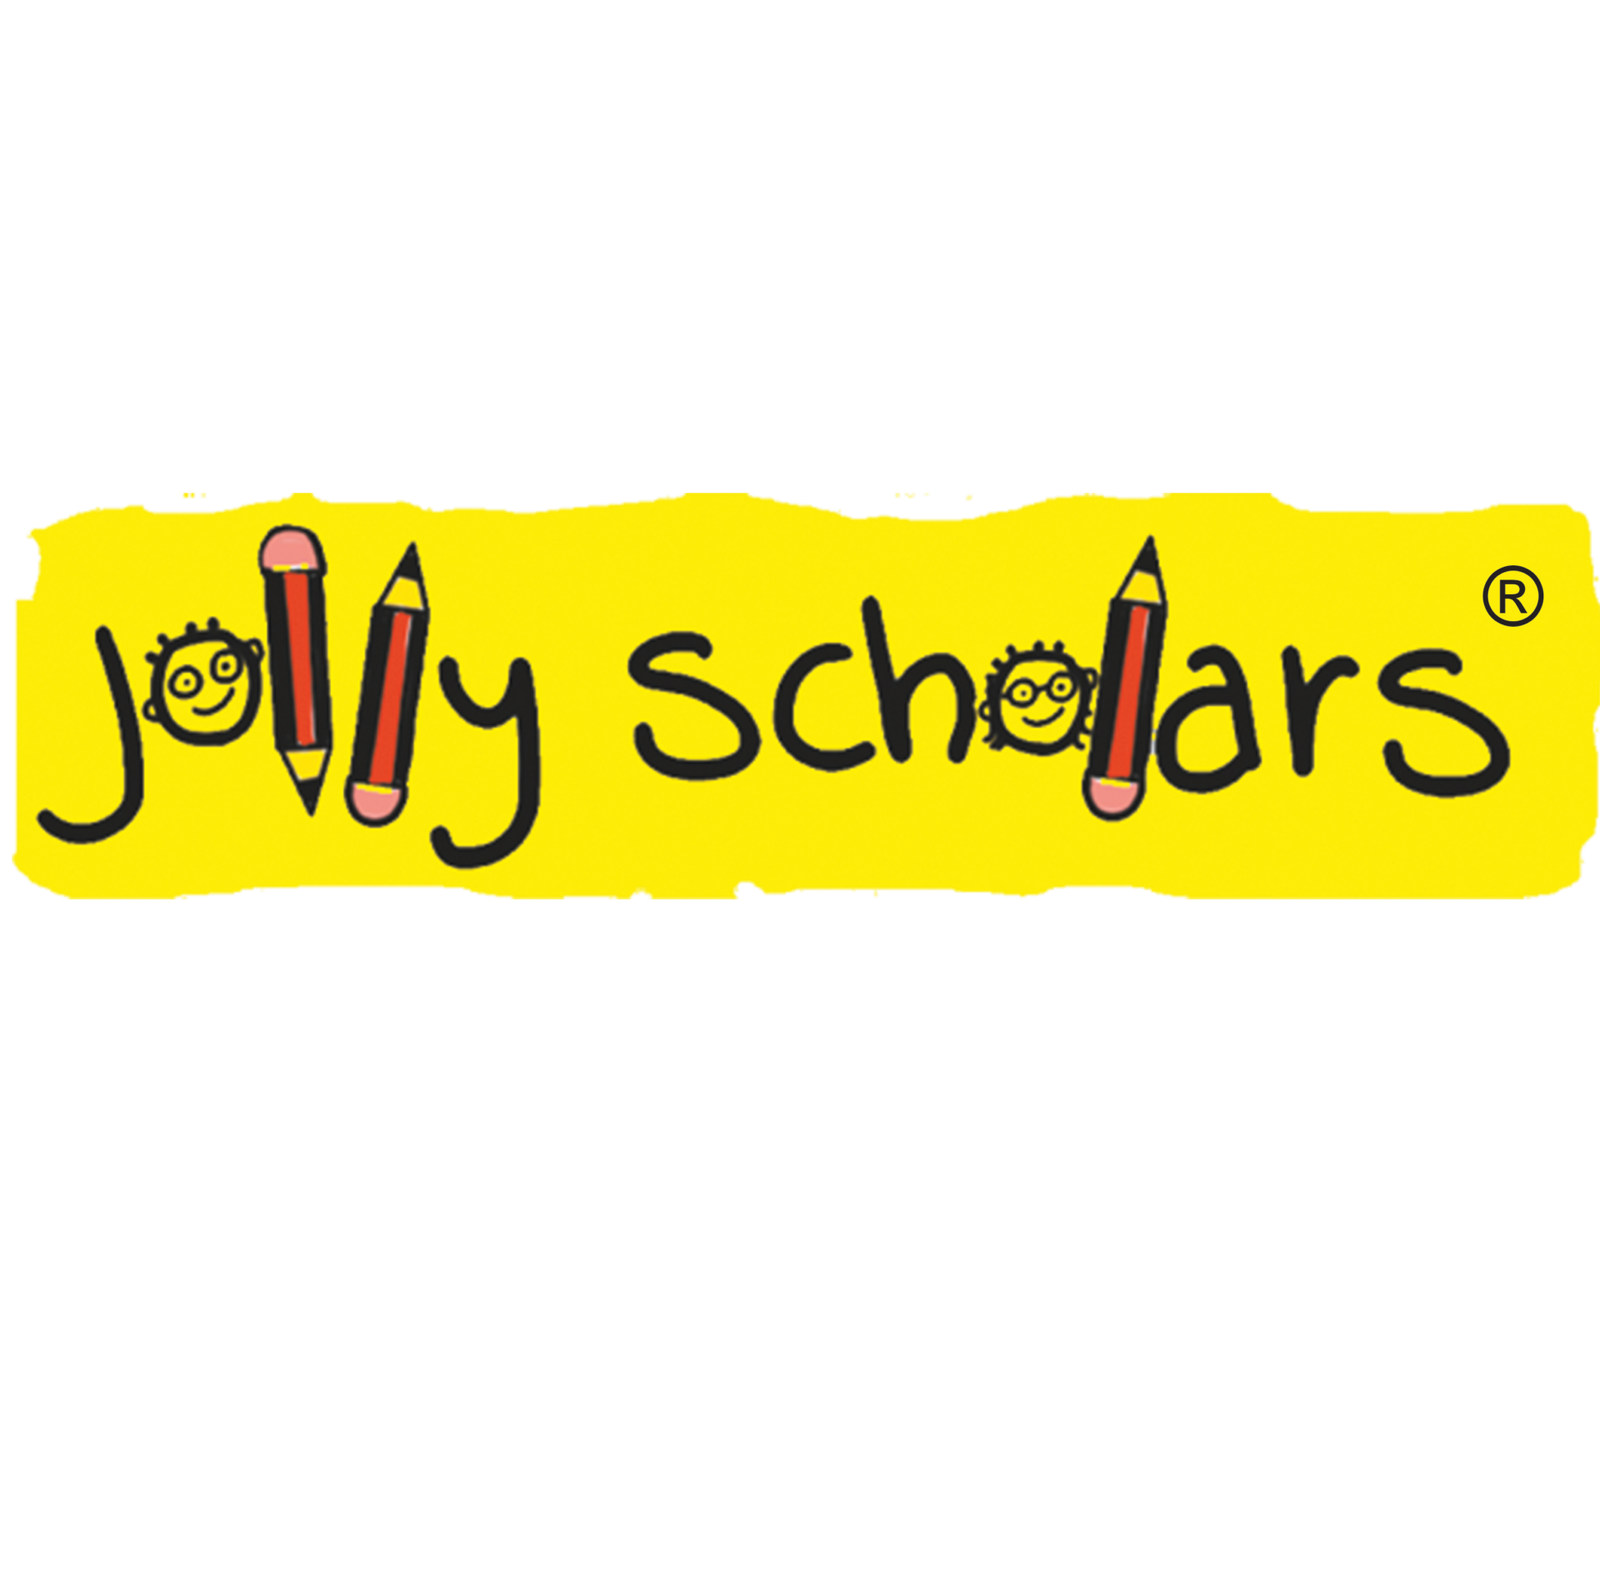 Jolly Scholars